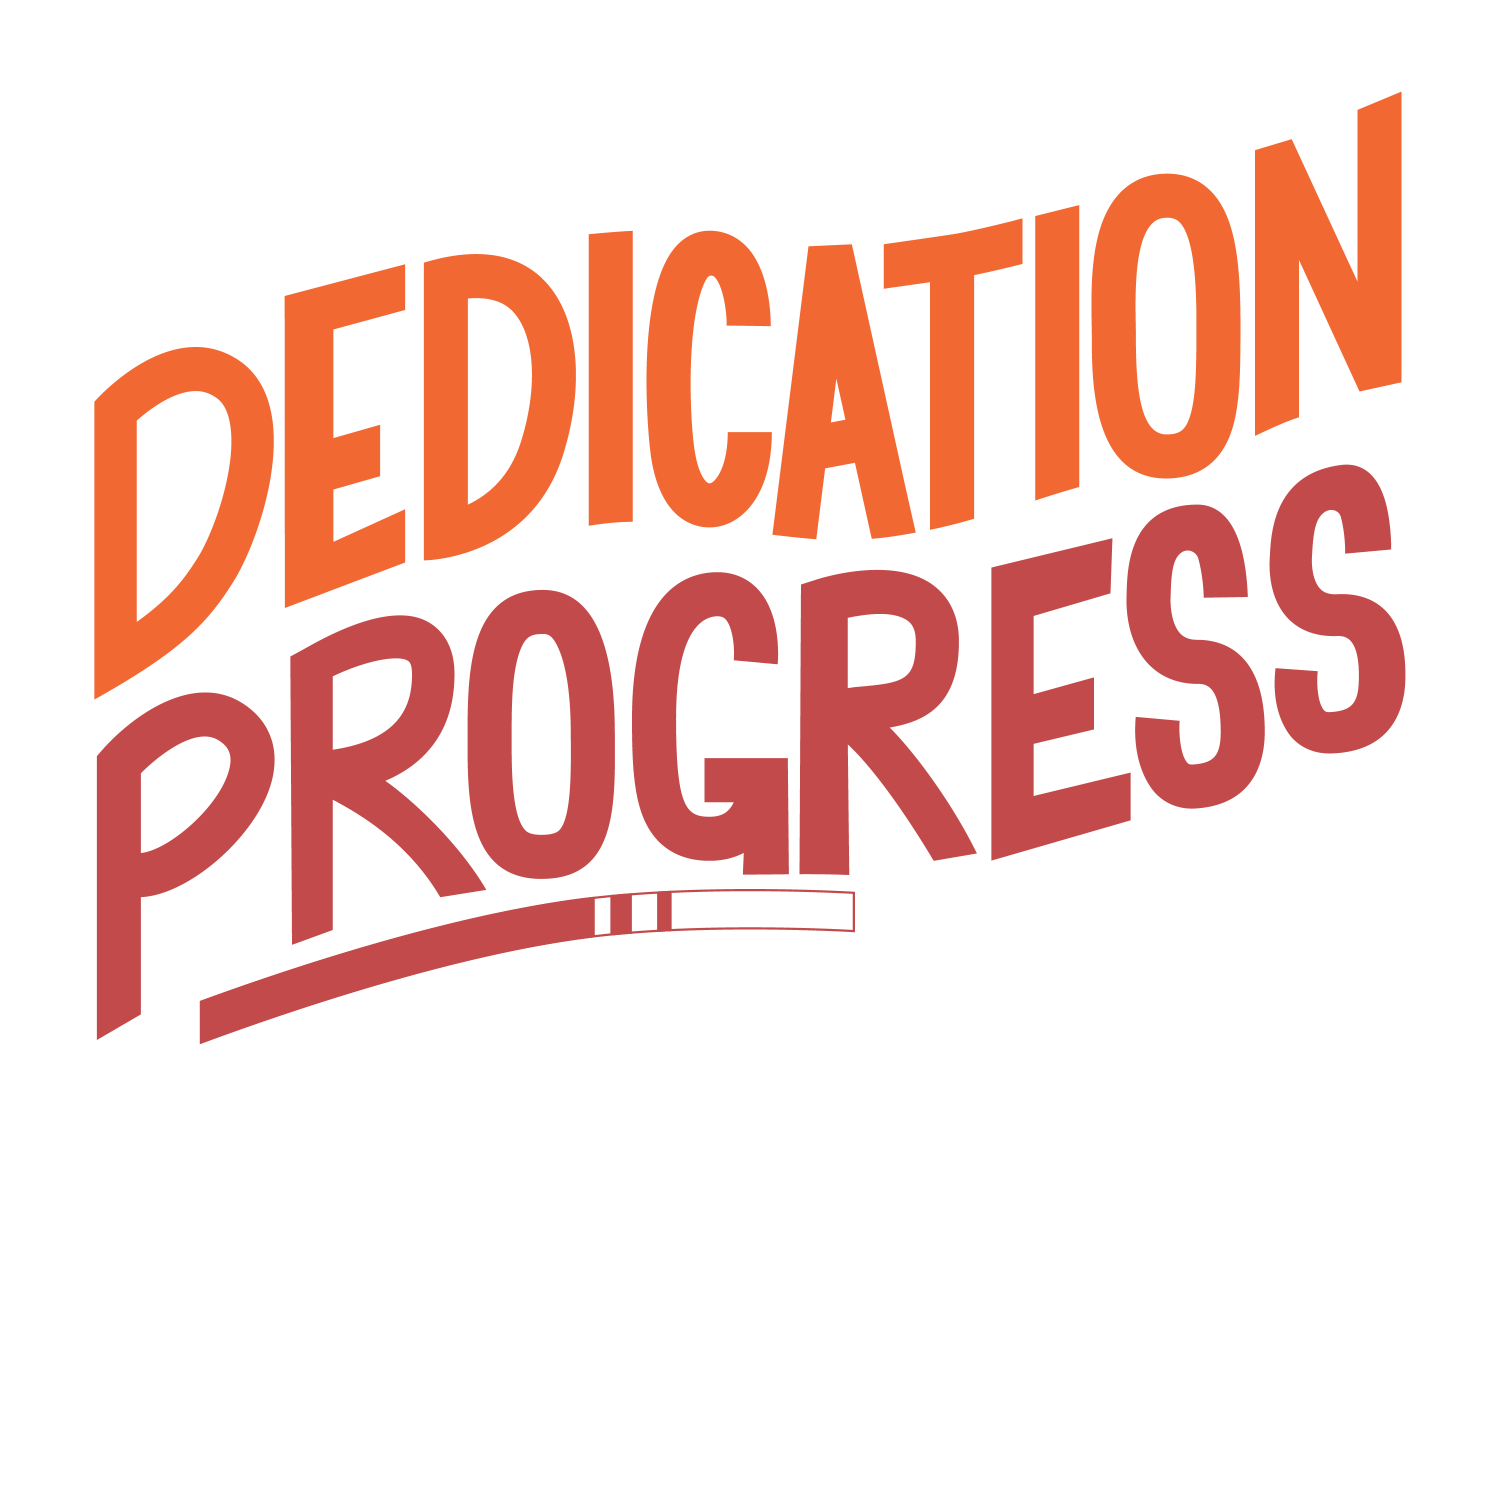 Dedication progress compassion